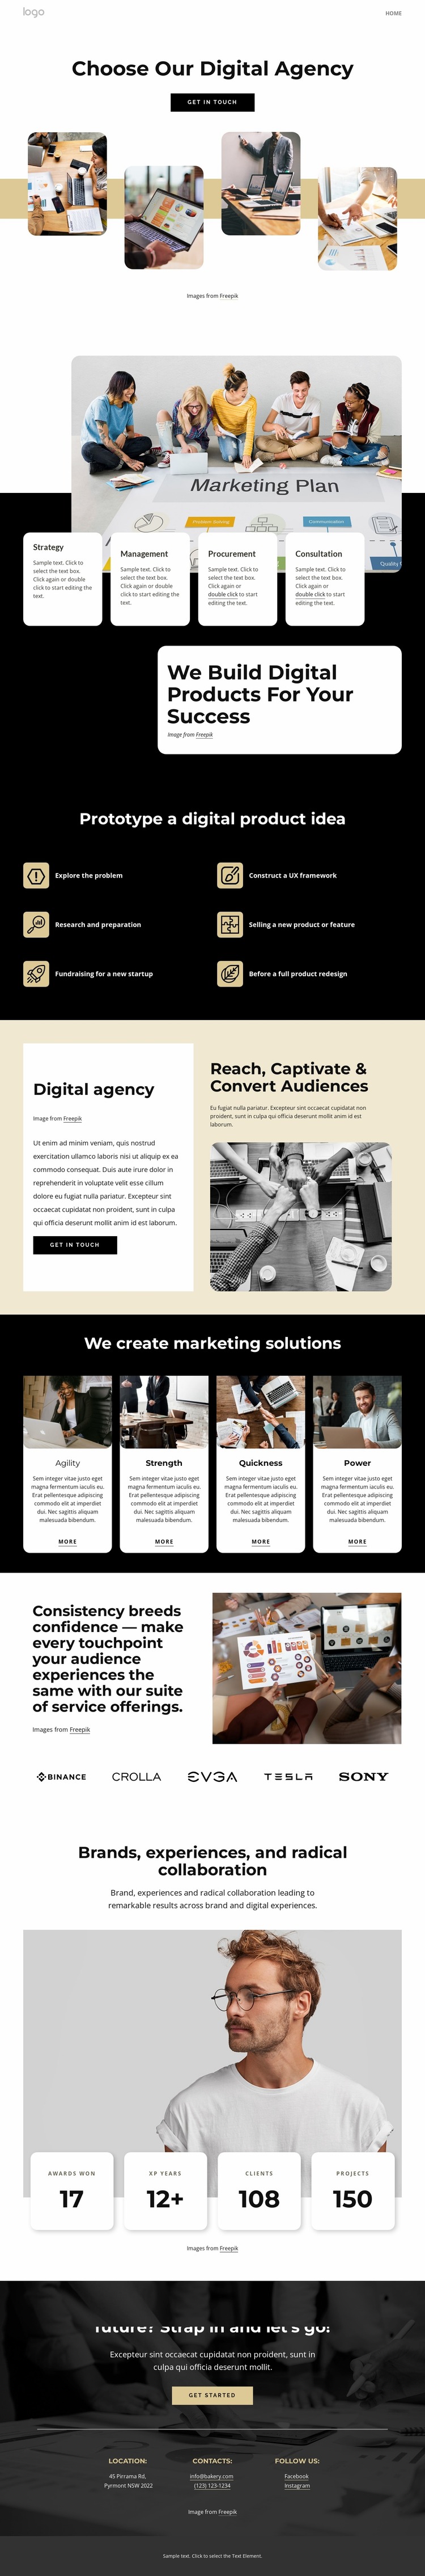 Choose our digital agency Website Mockup